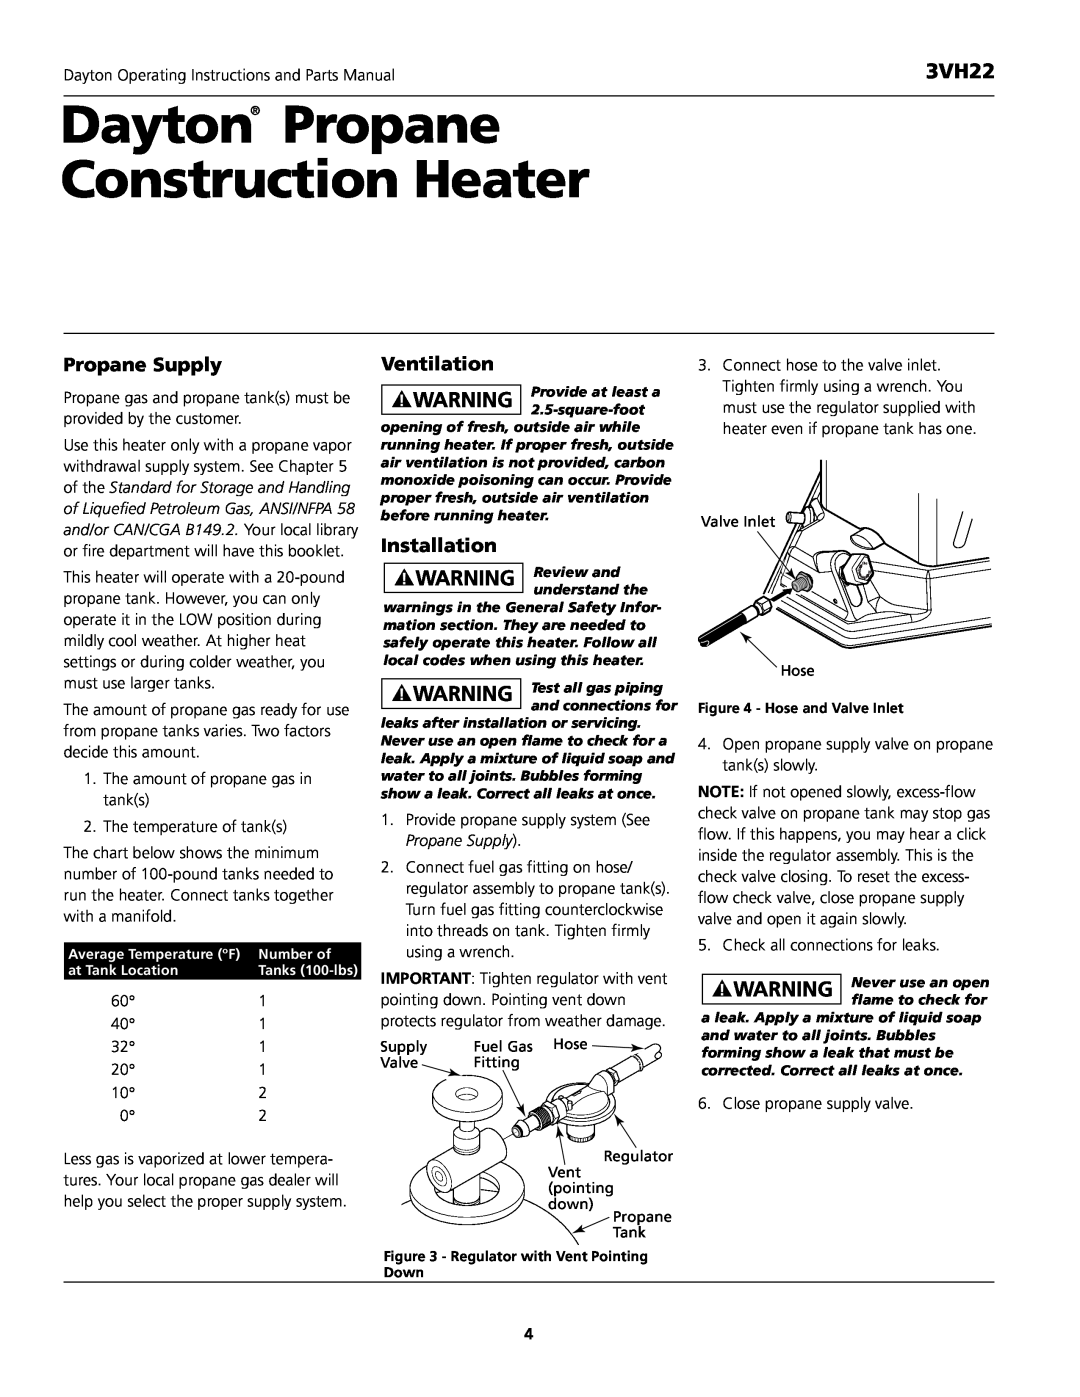 Dayton 3VH22 instruction manual Dayton Propane Construction Heater, Propane Supply, Ventilation, Installation 